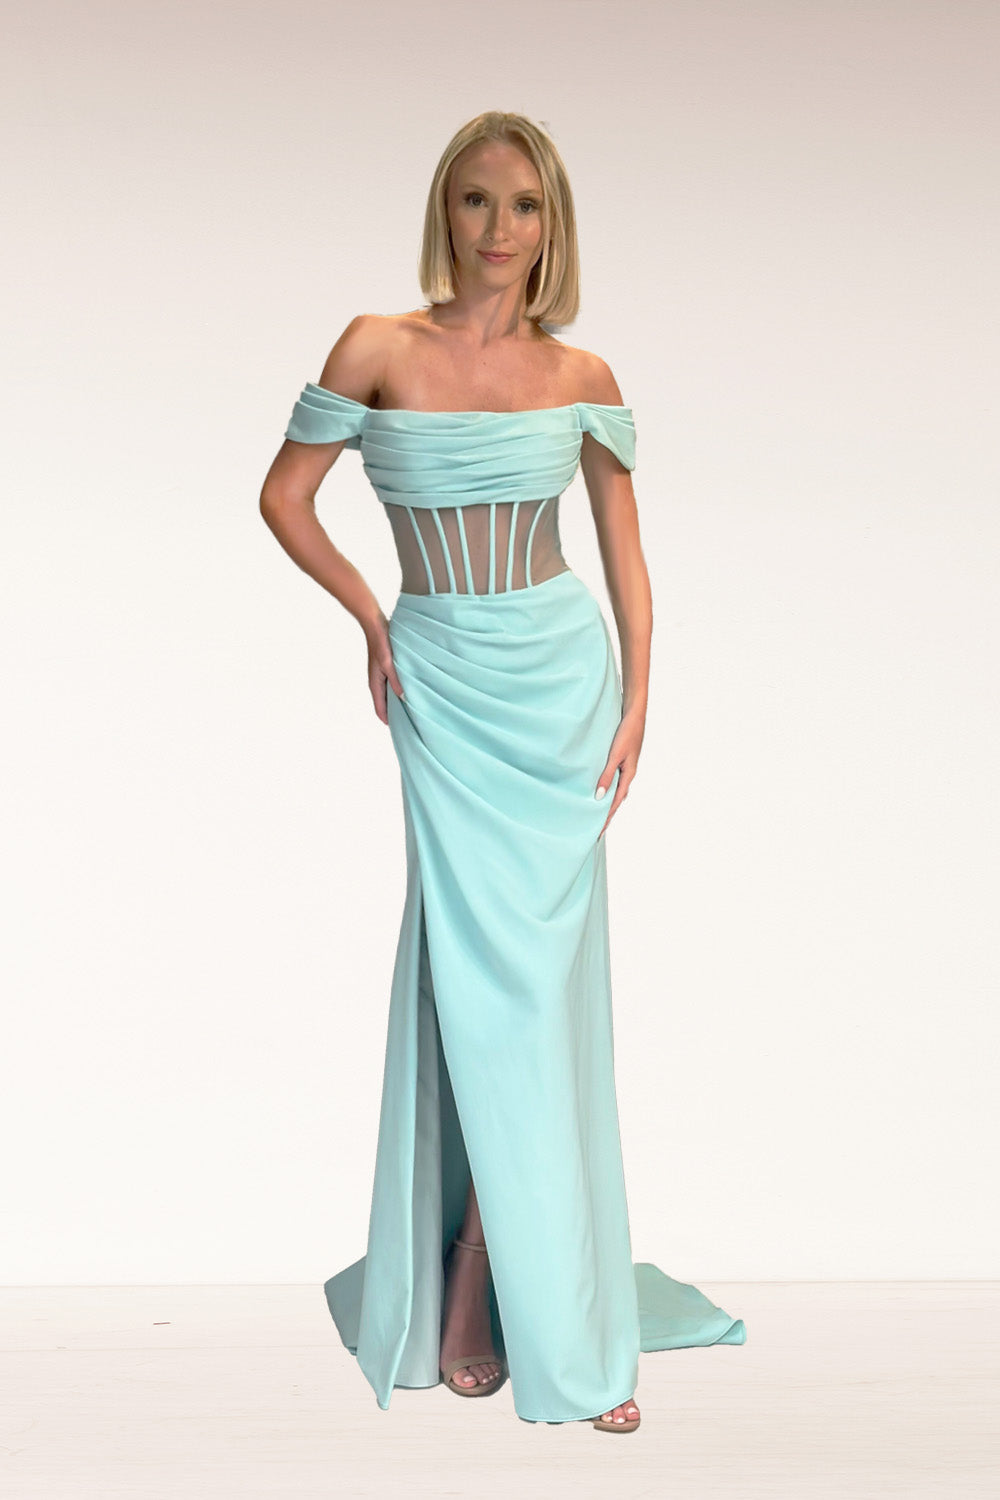 Lucci-Lu-1361-Straight-Neckline-Zipper-Back-High-Slit-Crepe-Fit-N-Flare-Aqua-Evening-Dress-B-Chic-Fashions-Prom-Dress